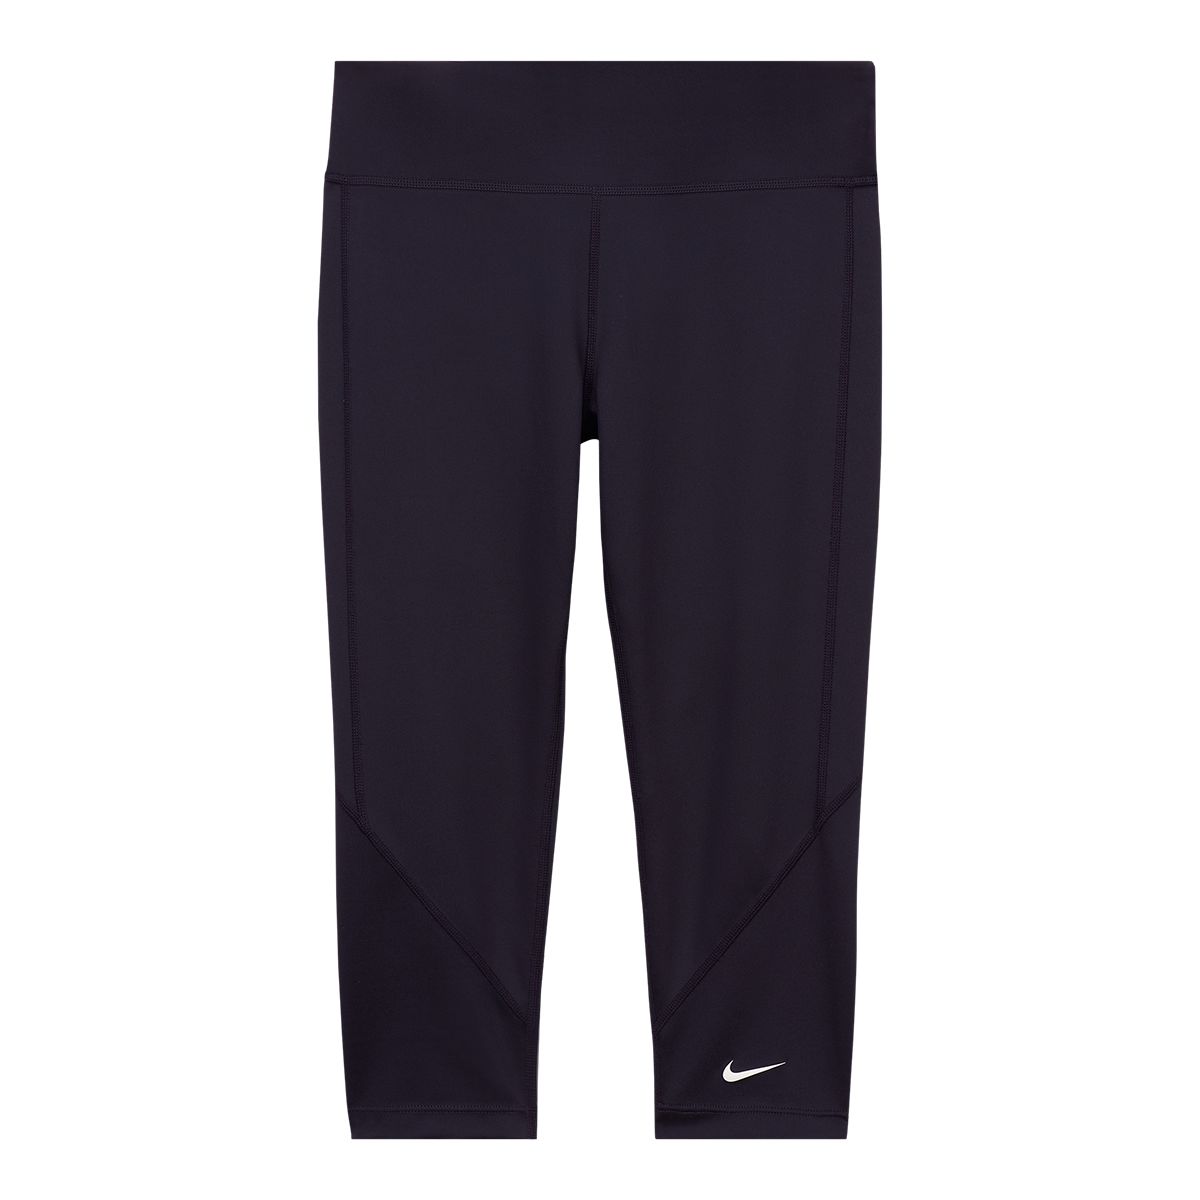 Nike Women's Regular Active Tight Fit Capri Leggings Pants Black M *Defect  for sale online